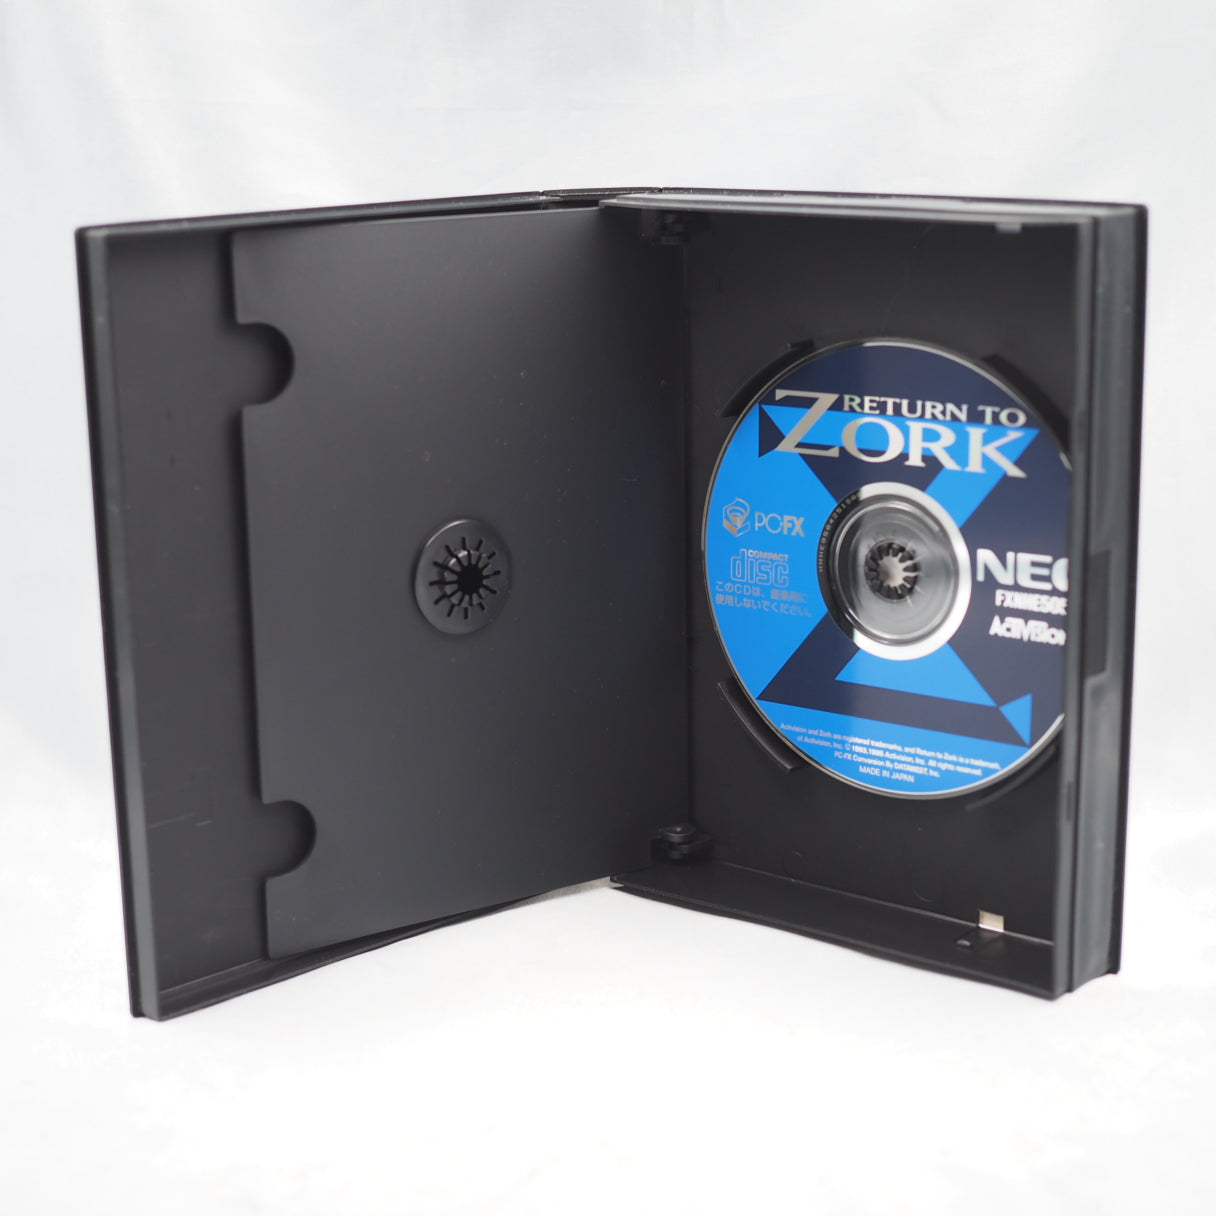 PC-FX Console system + ZORK SET